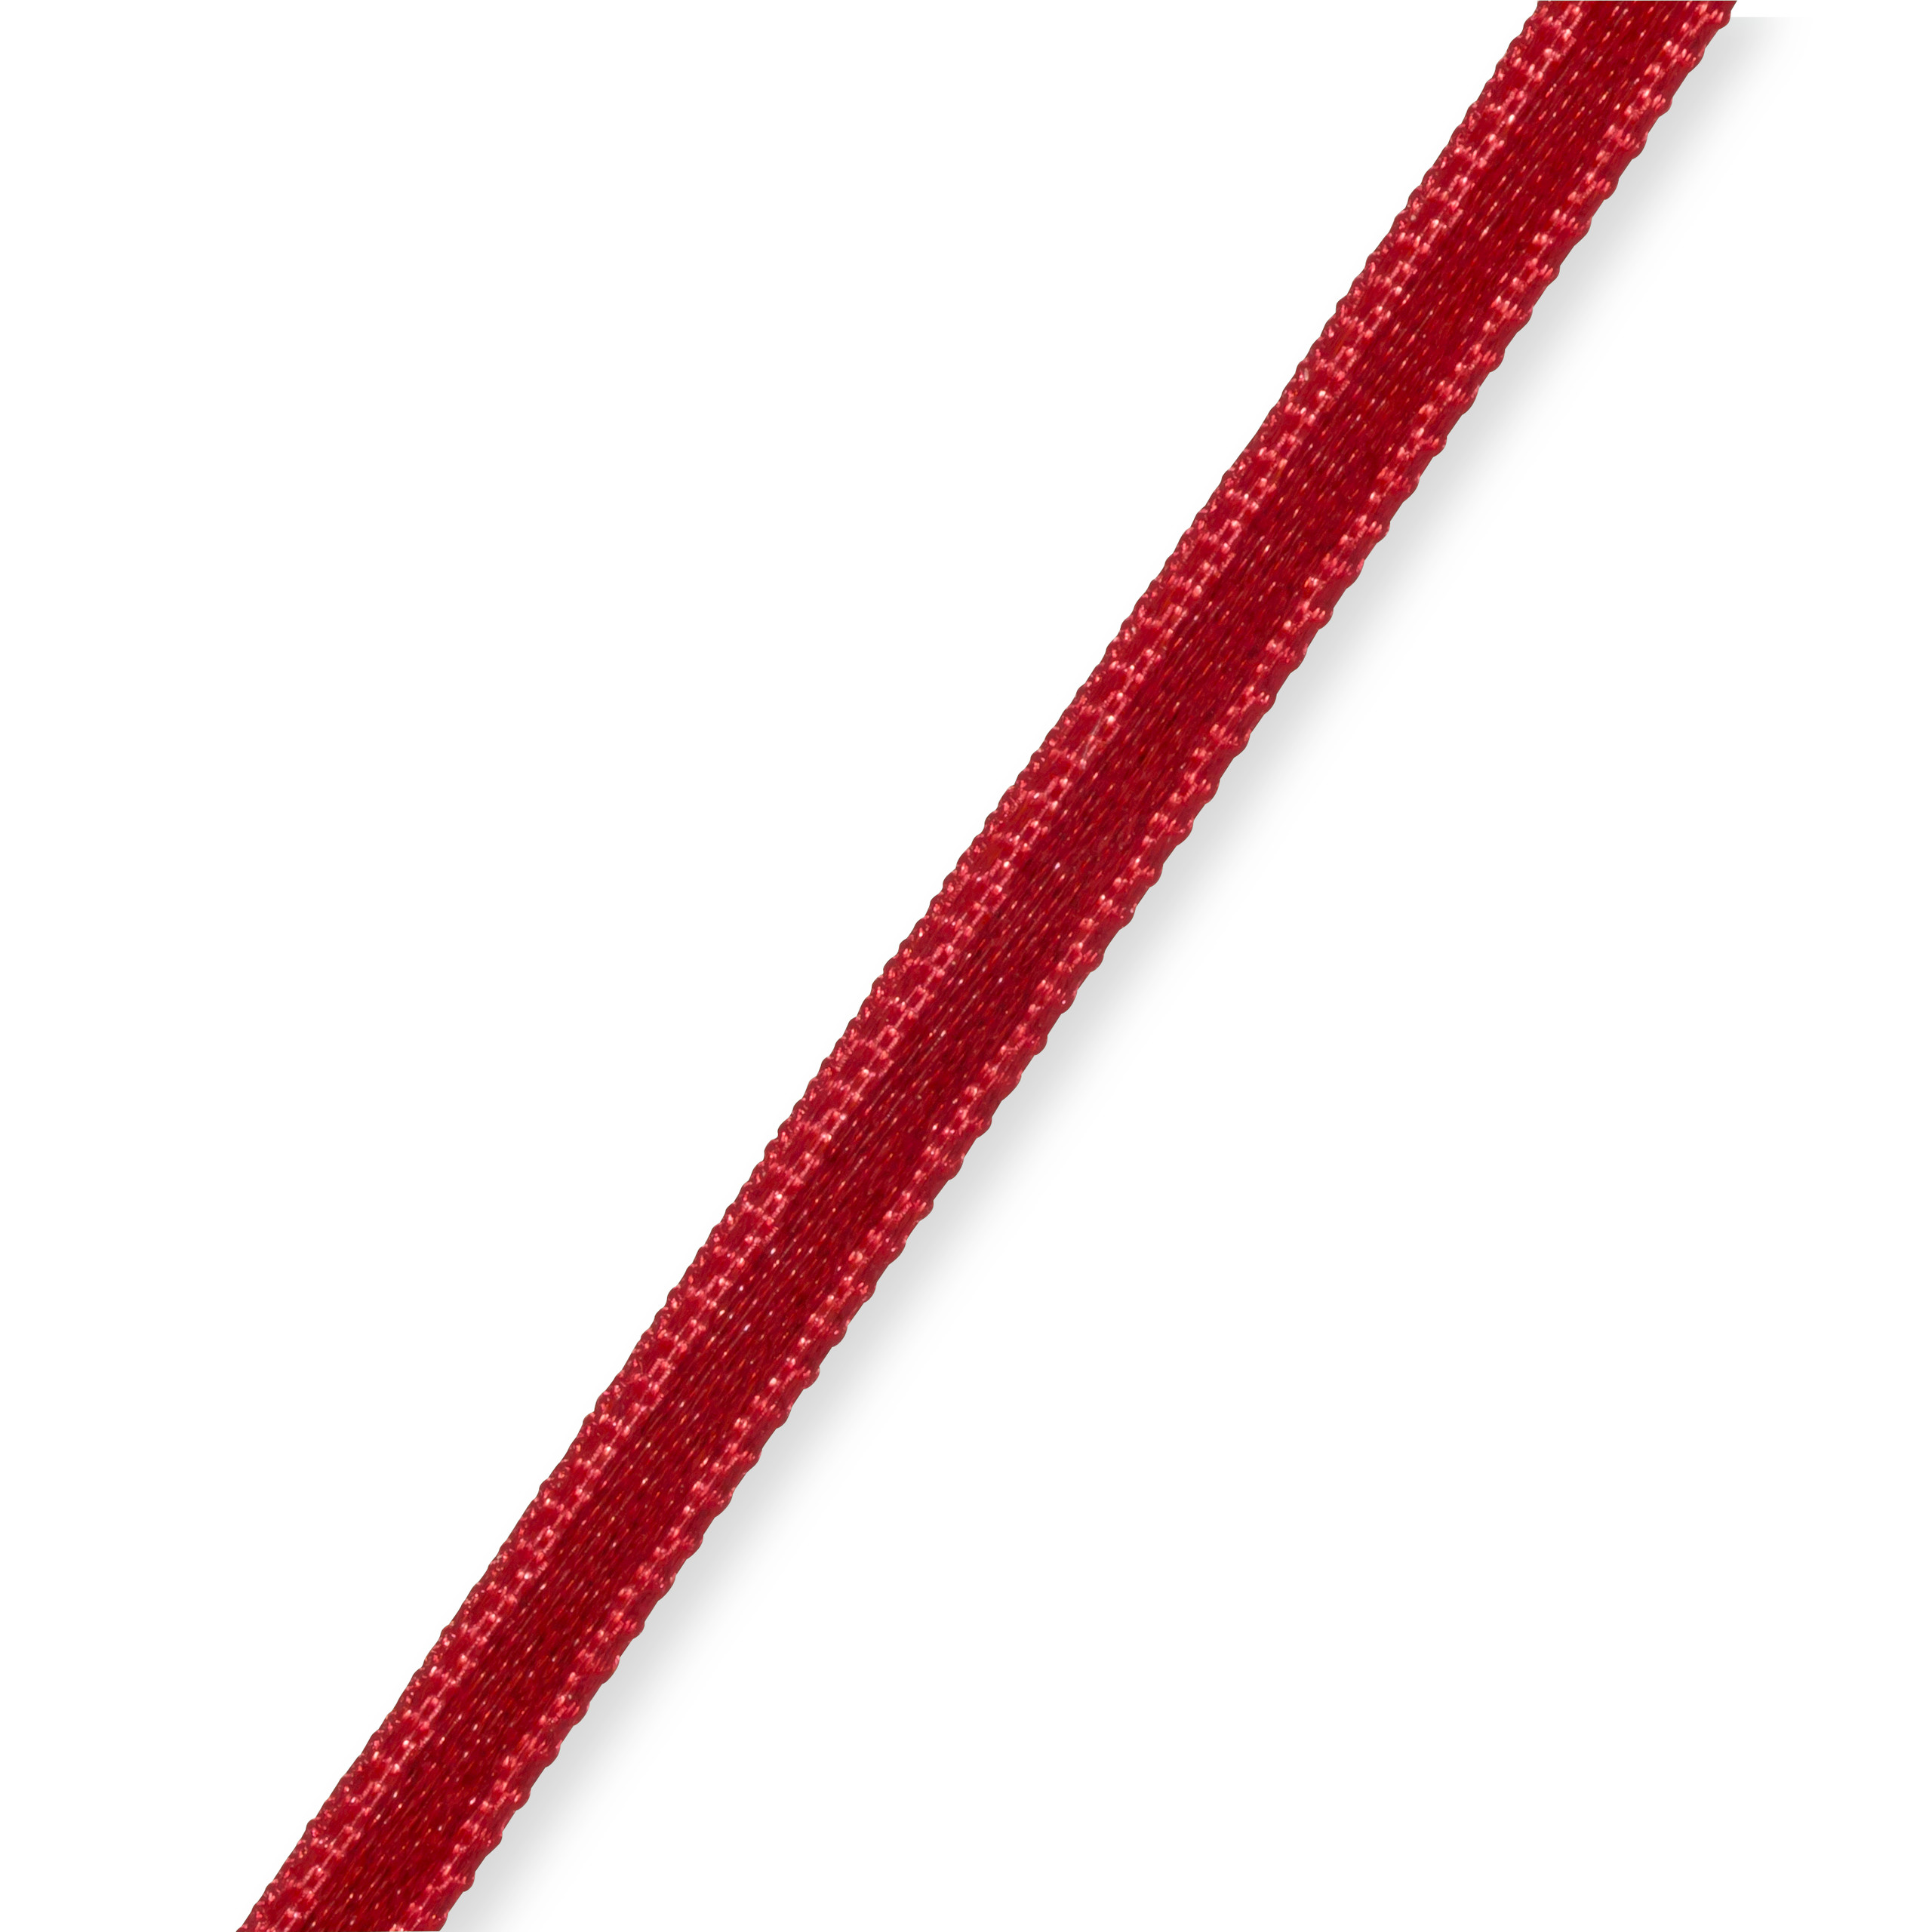 Satin ribbon 3 mm red, 50 m